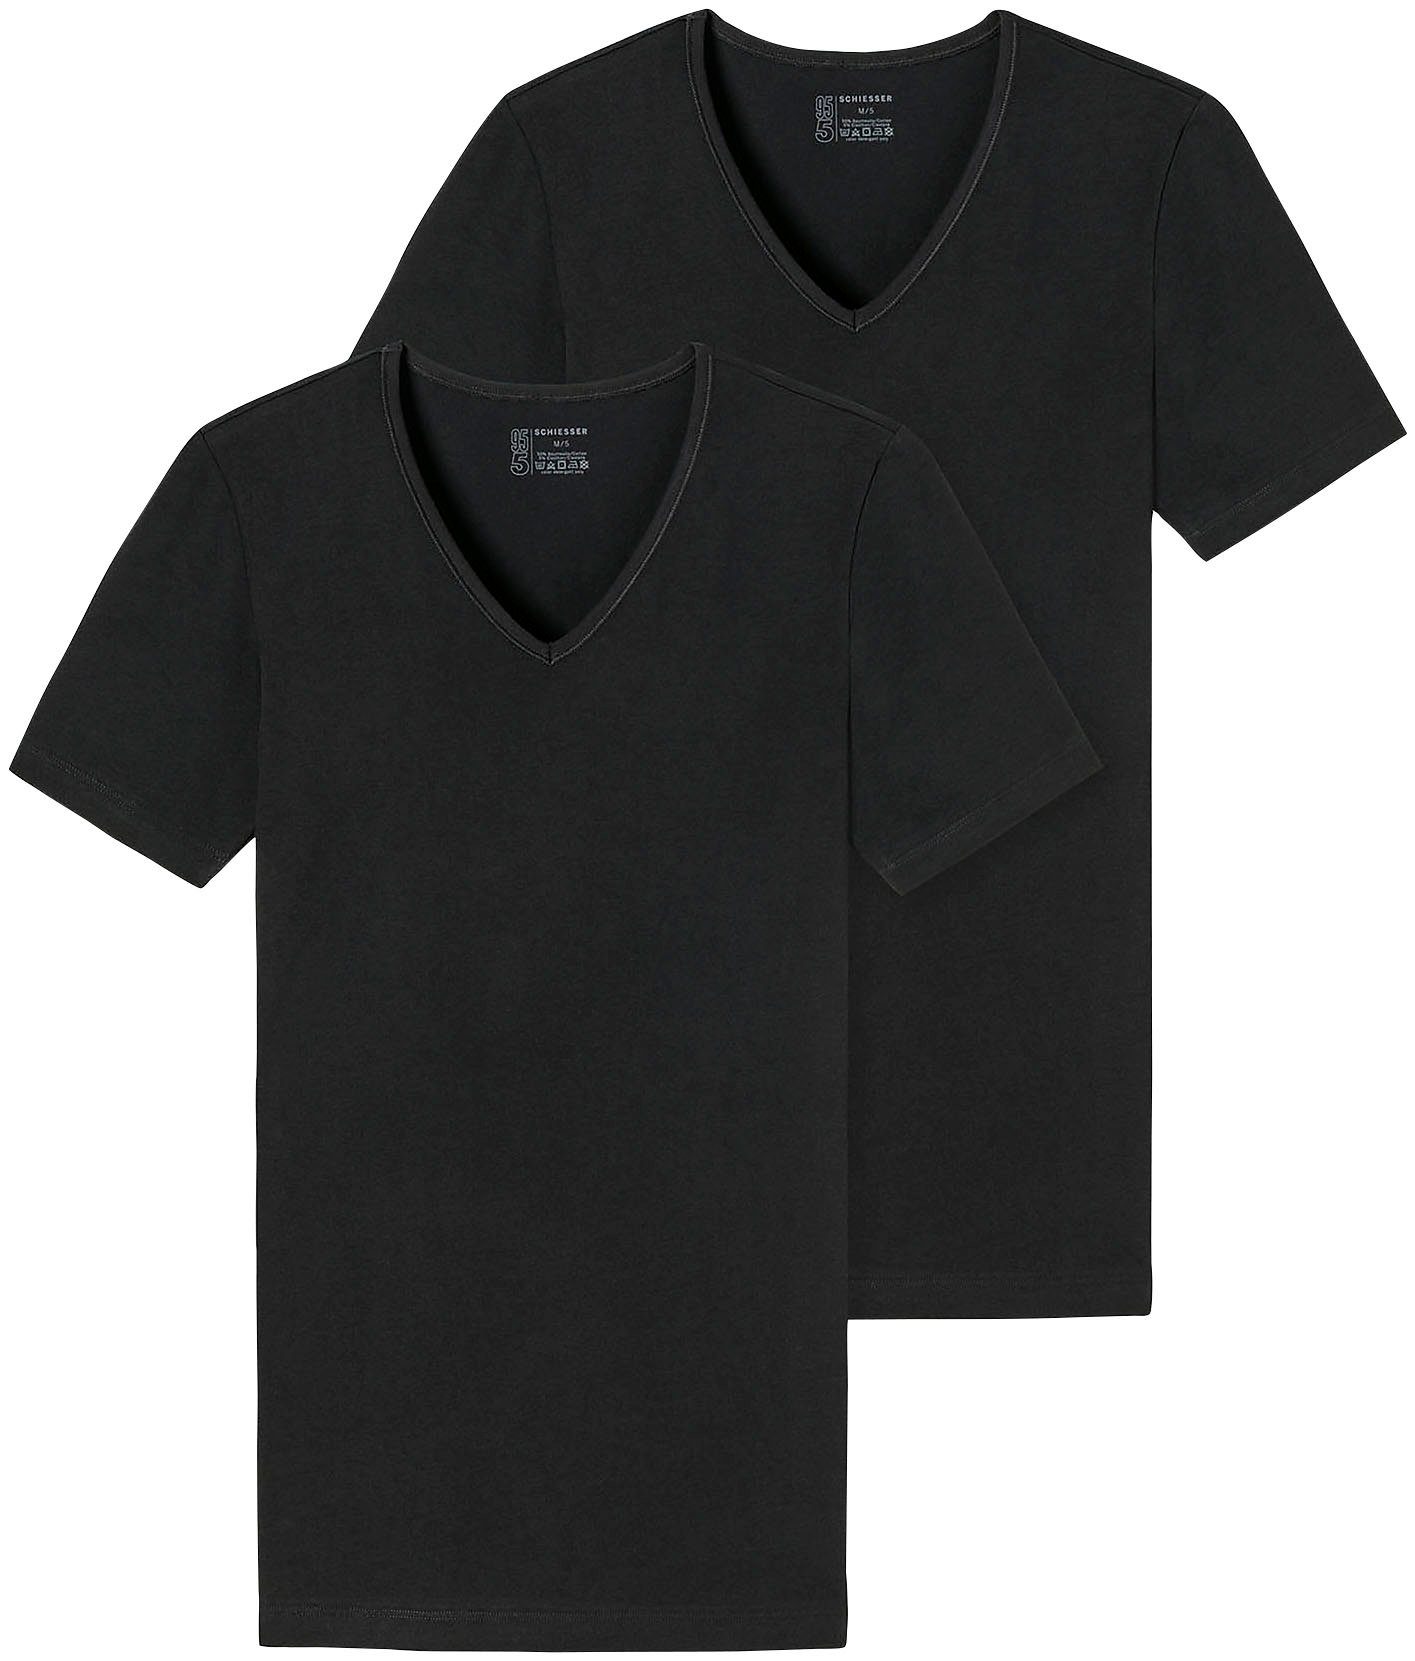 Schiesser V-Shirt (2er-Pack) mit V-Ausschnitt schwarz